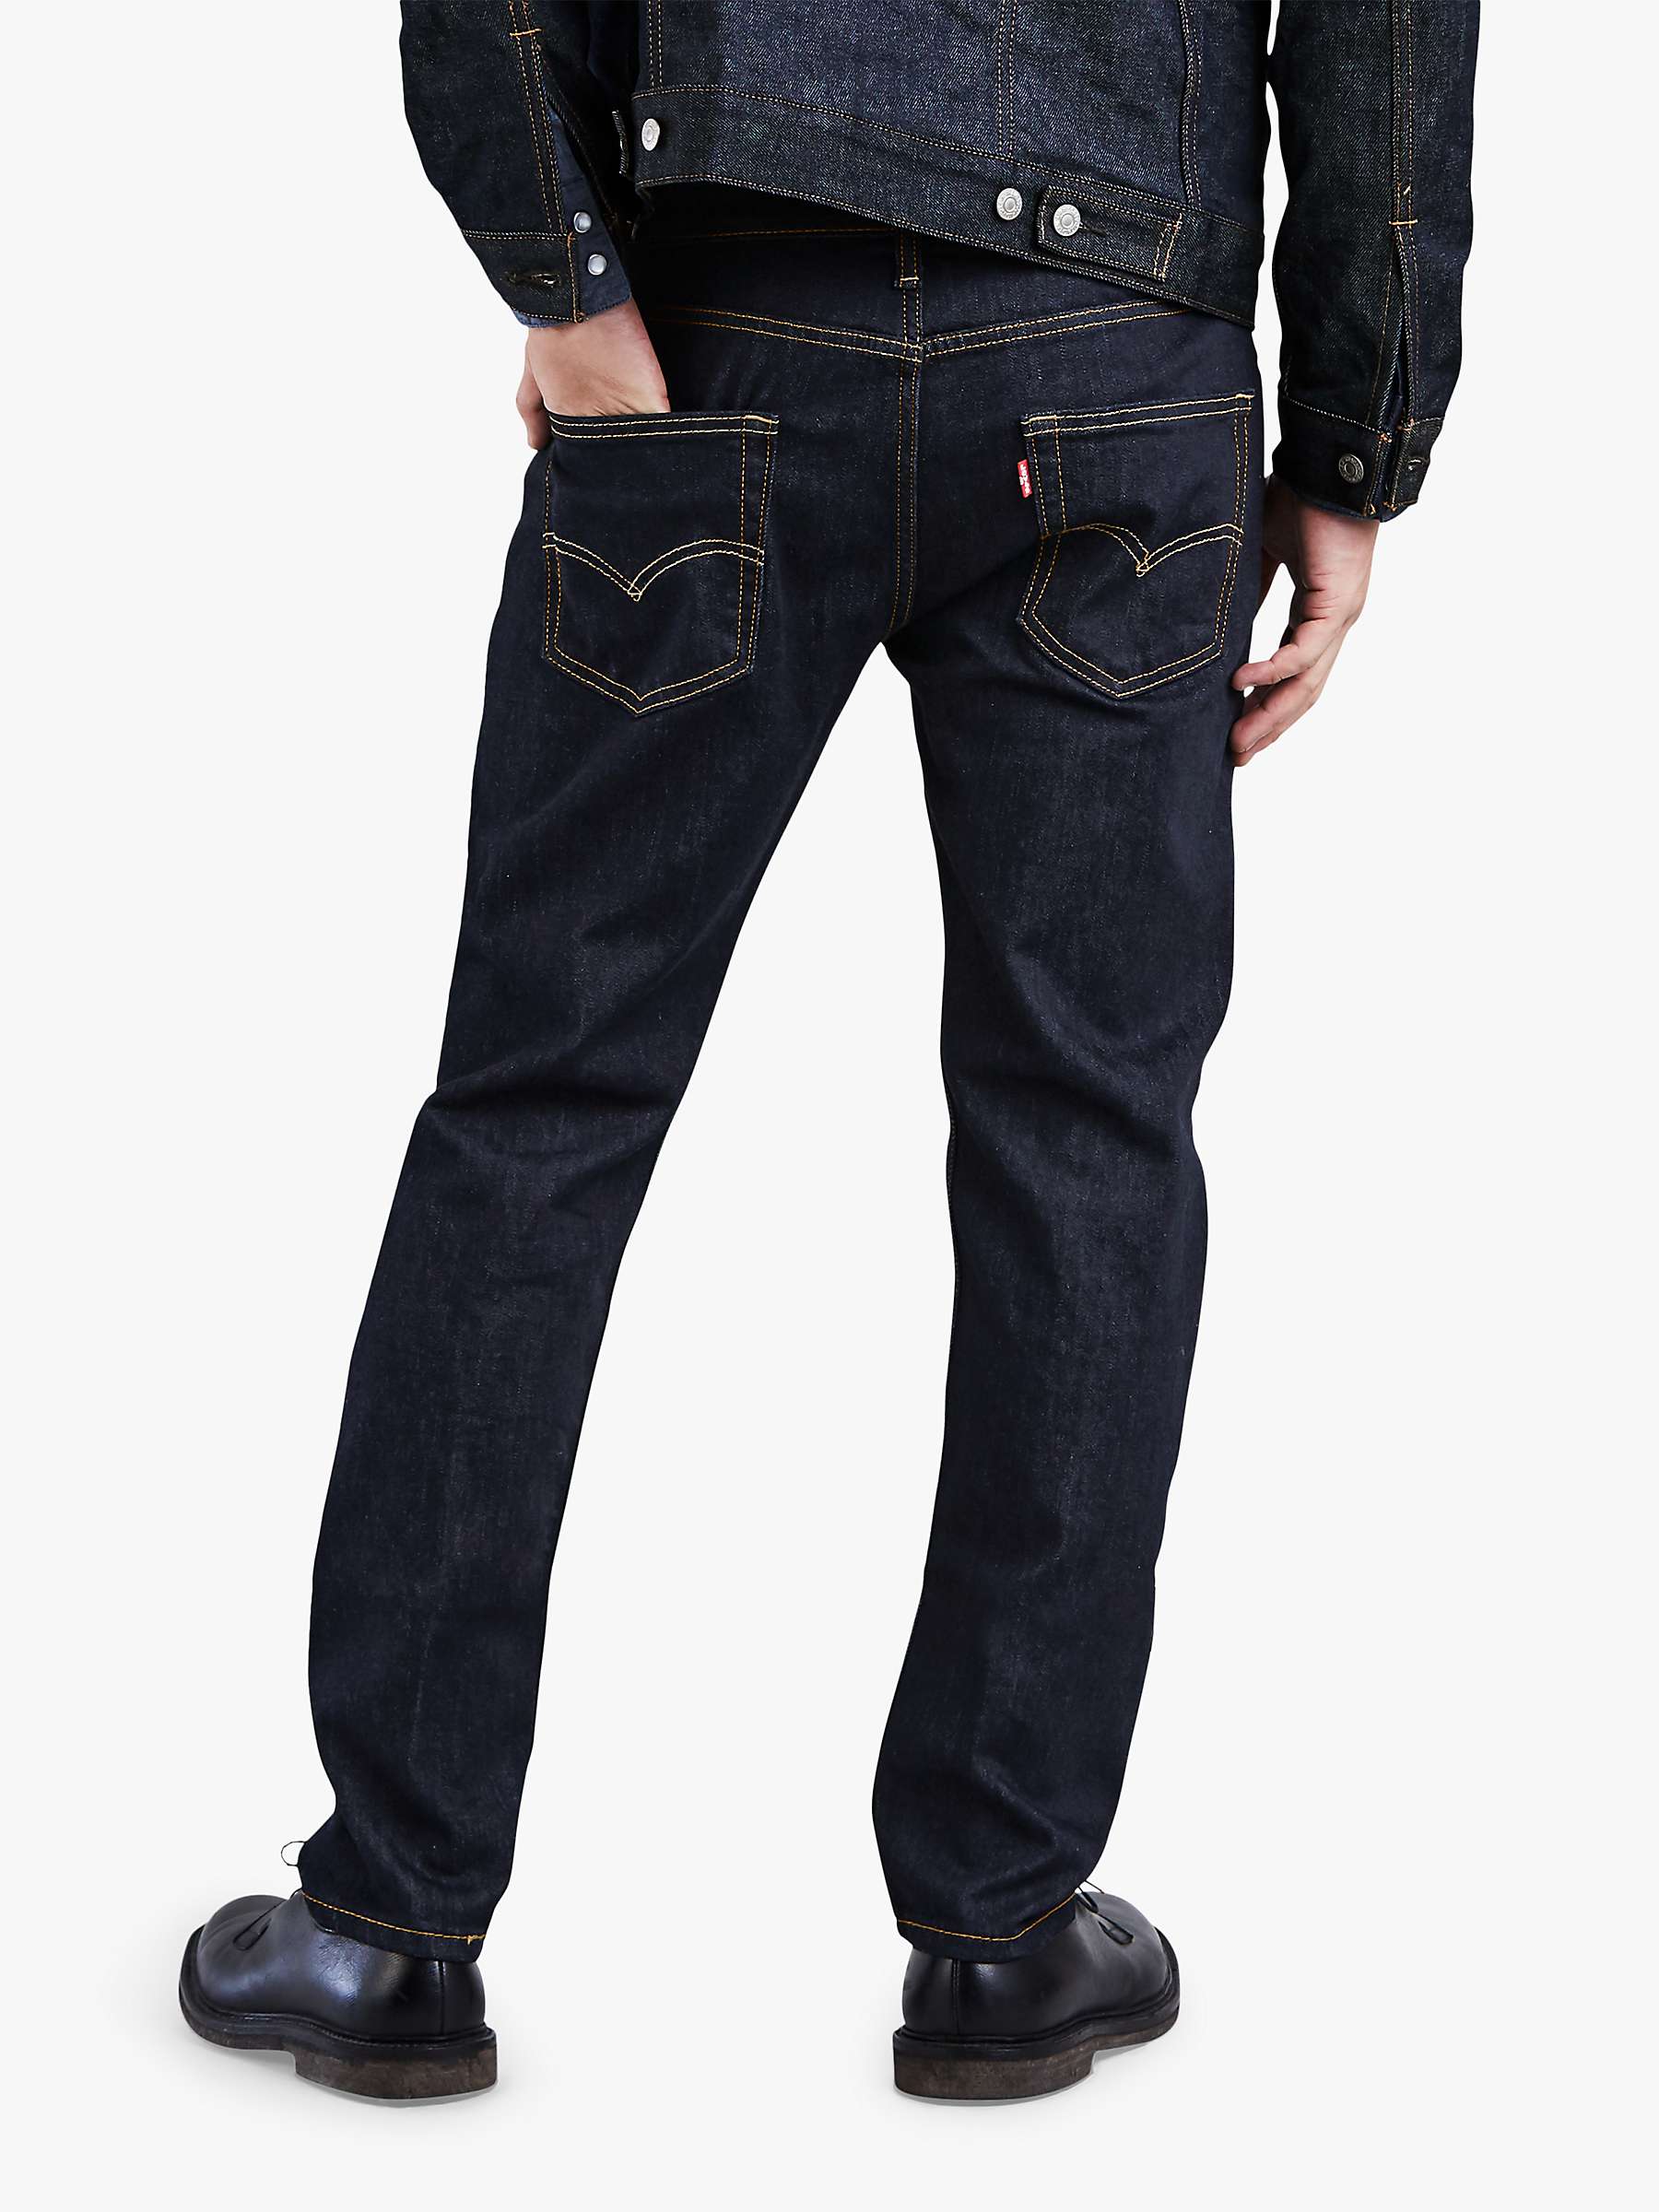 Buy Levi's 502 Regular Tapered Jeans, Rock Cod Online at johnlewis.com